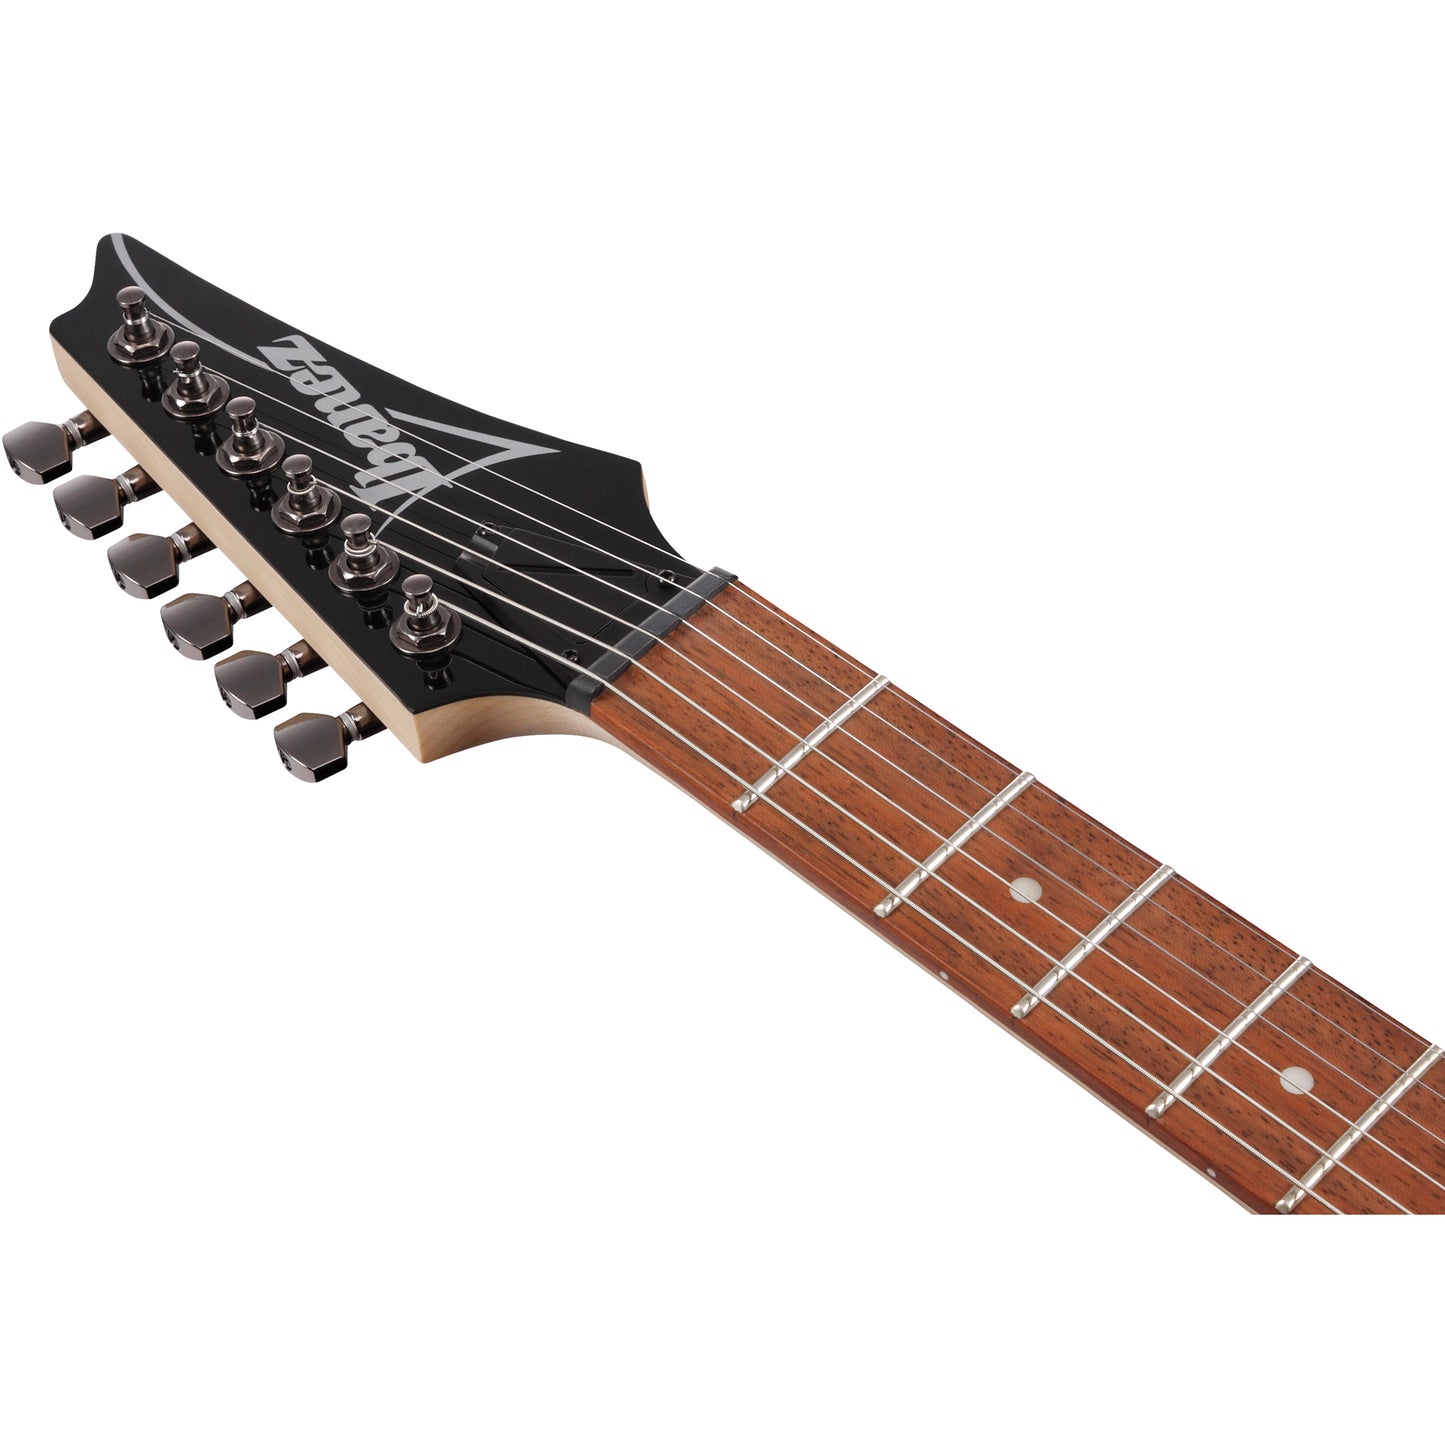 Ibanez RG Standard 6 String Electric Guitar - Mahogany Oil